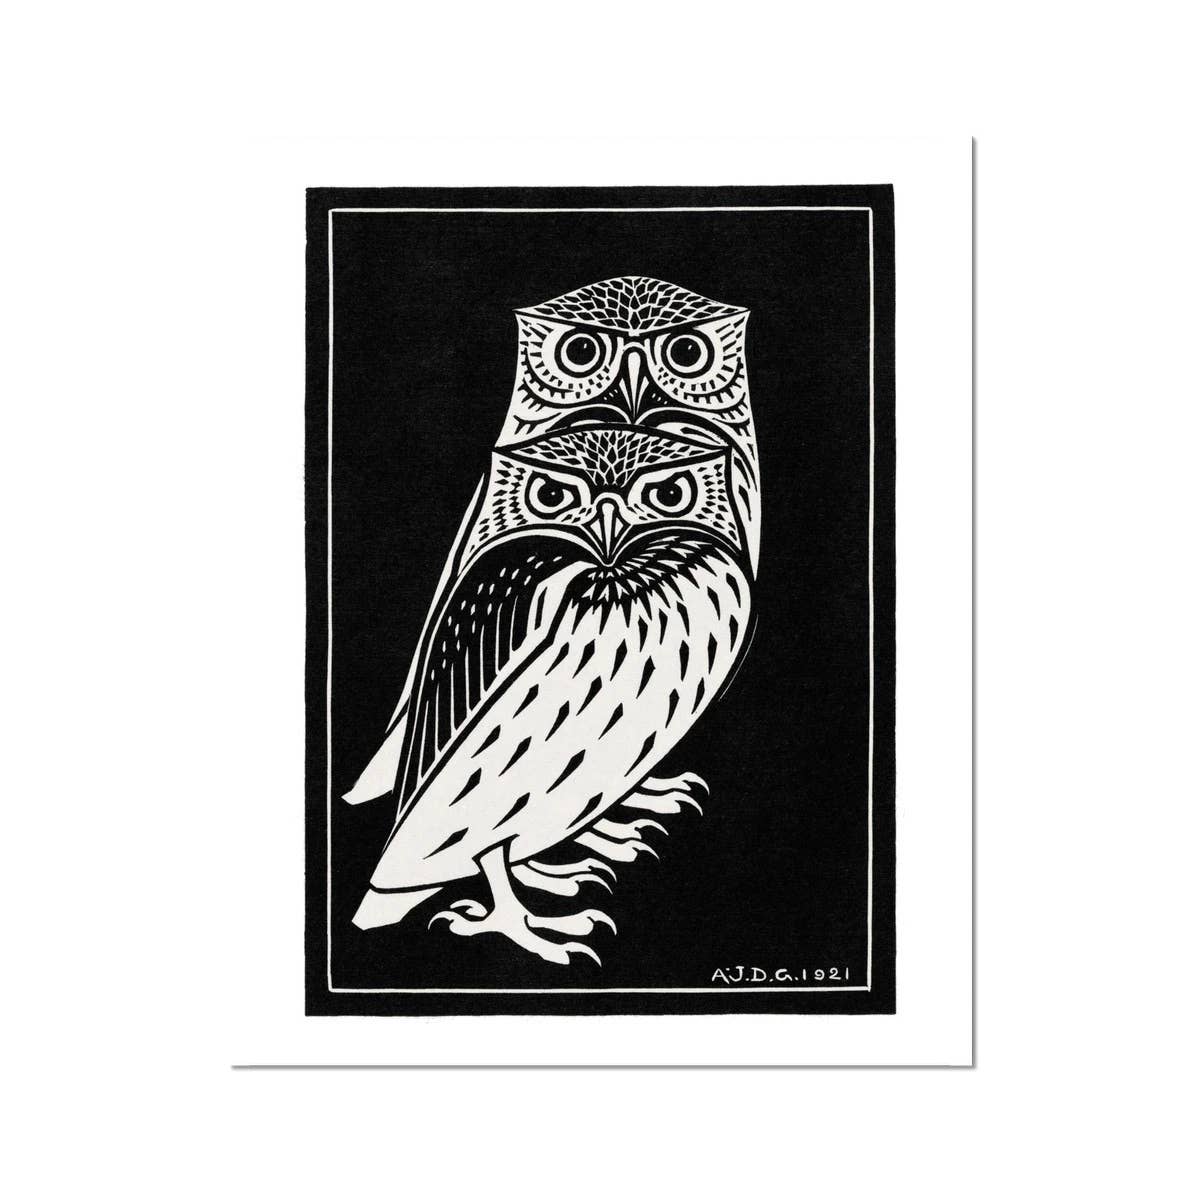 Two Owls, Julie de Graag {c.1921} | 11